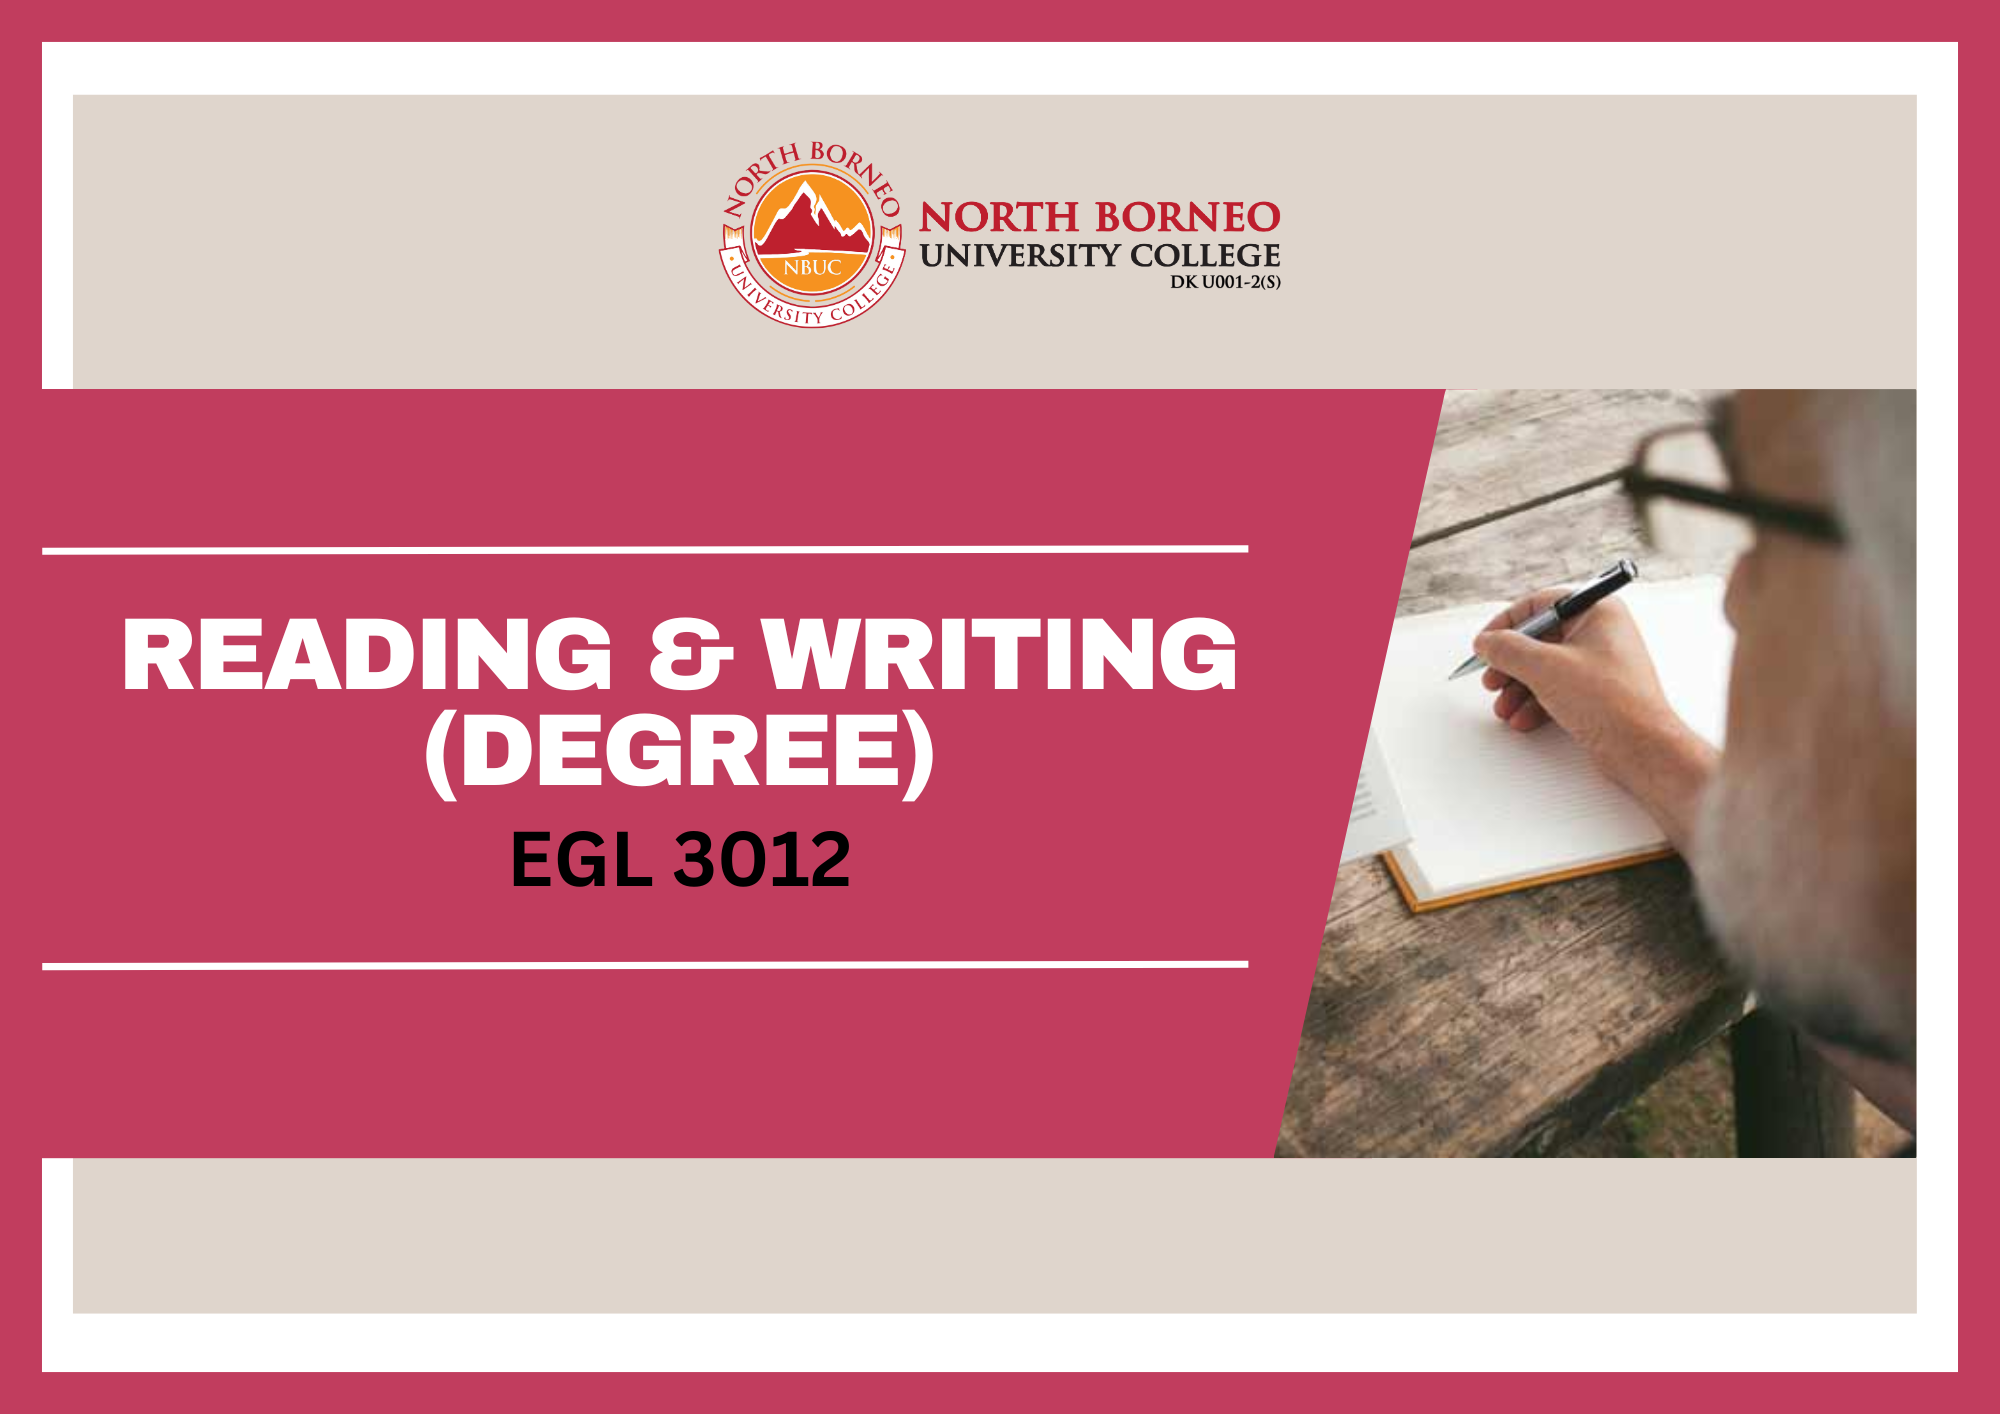 READING AND WRITING (BACHELOR / EGL 3012)